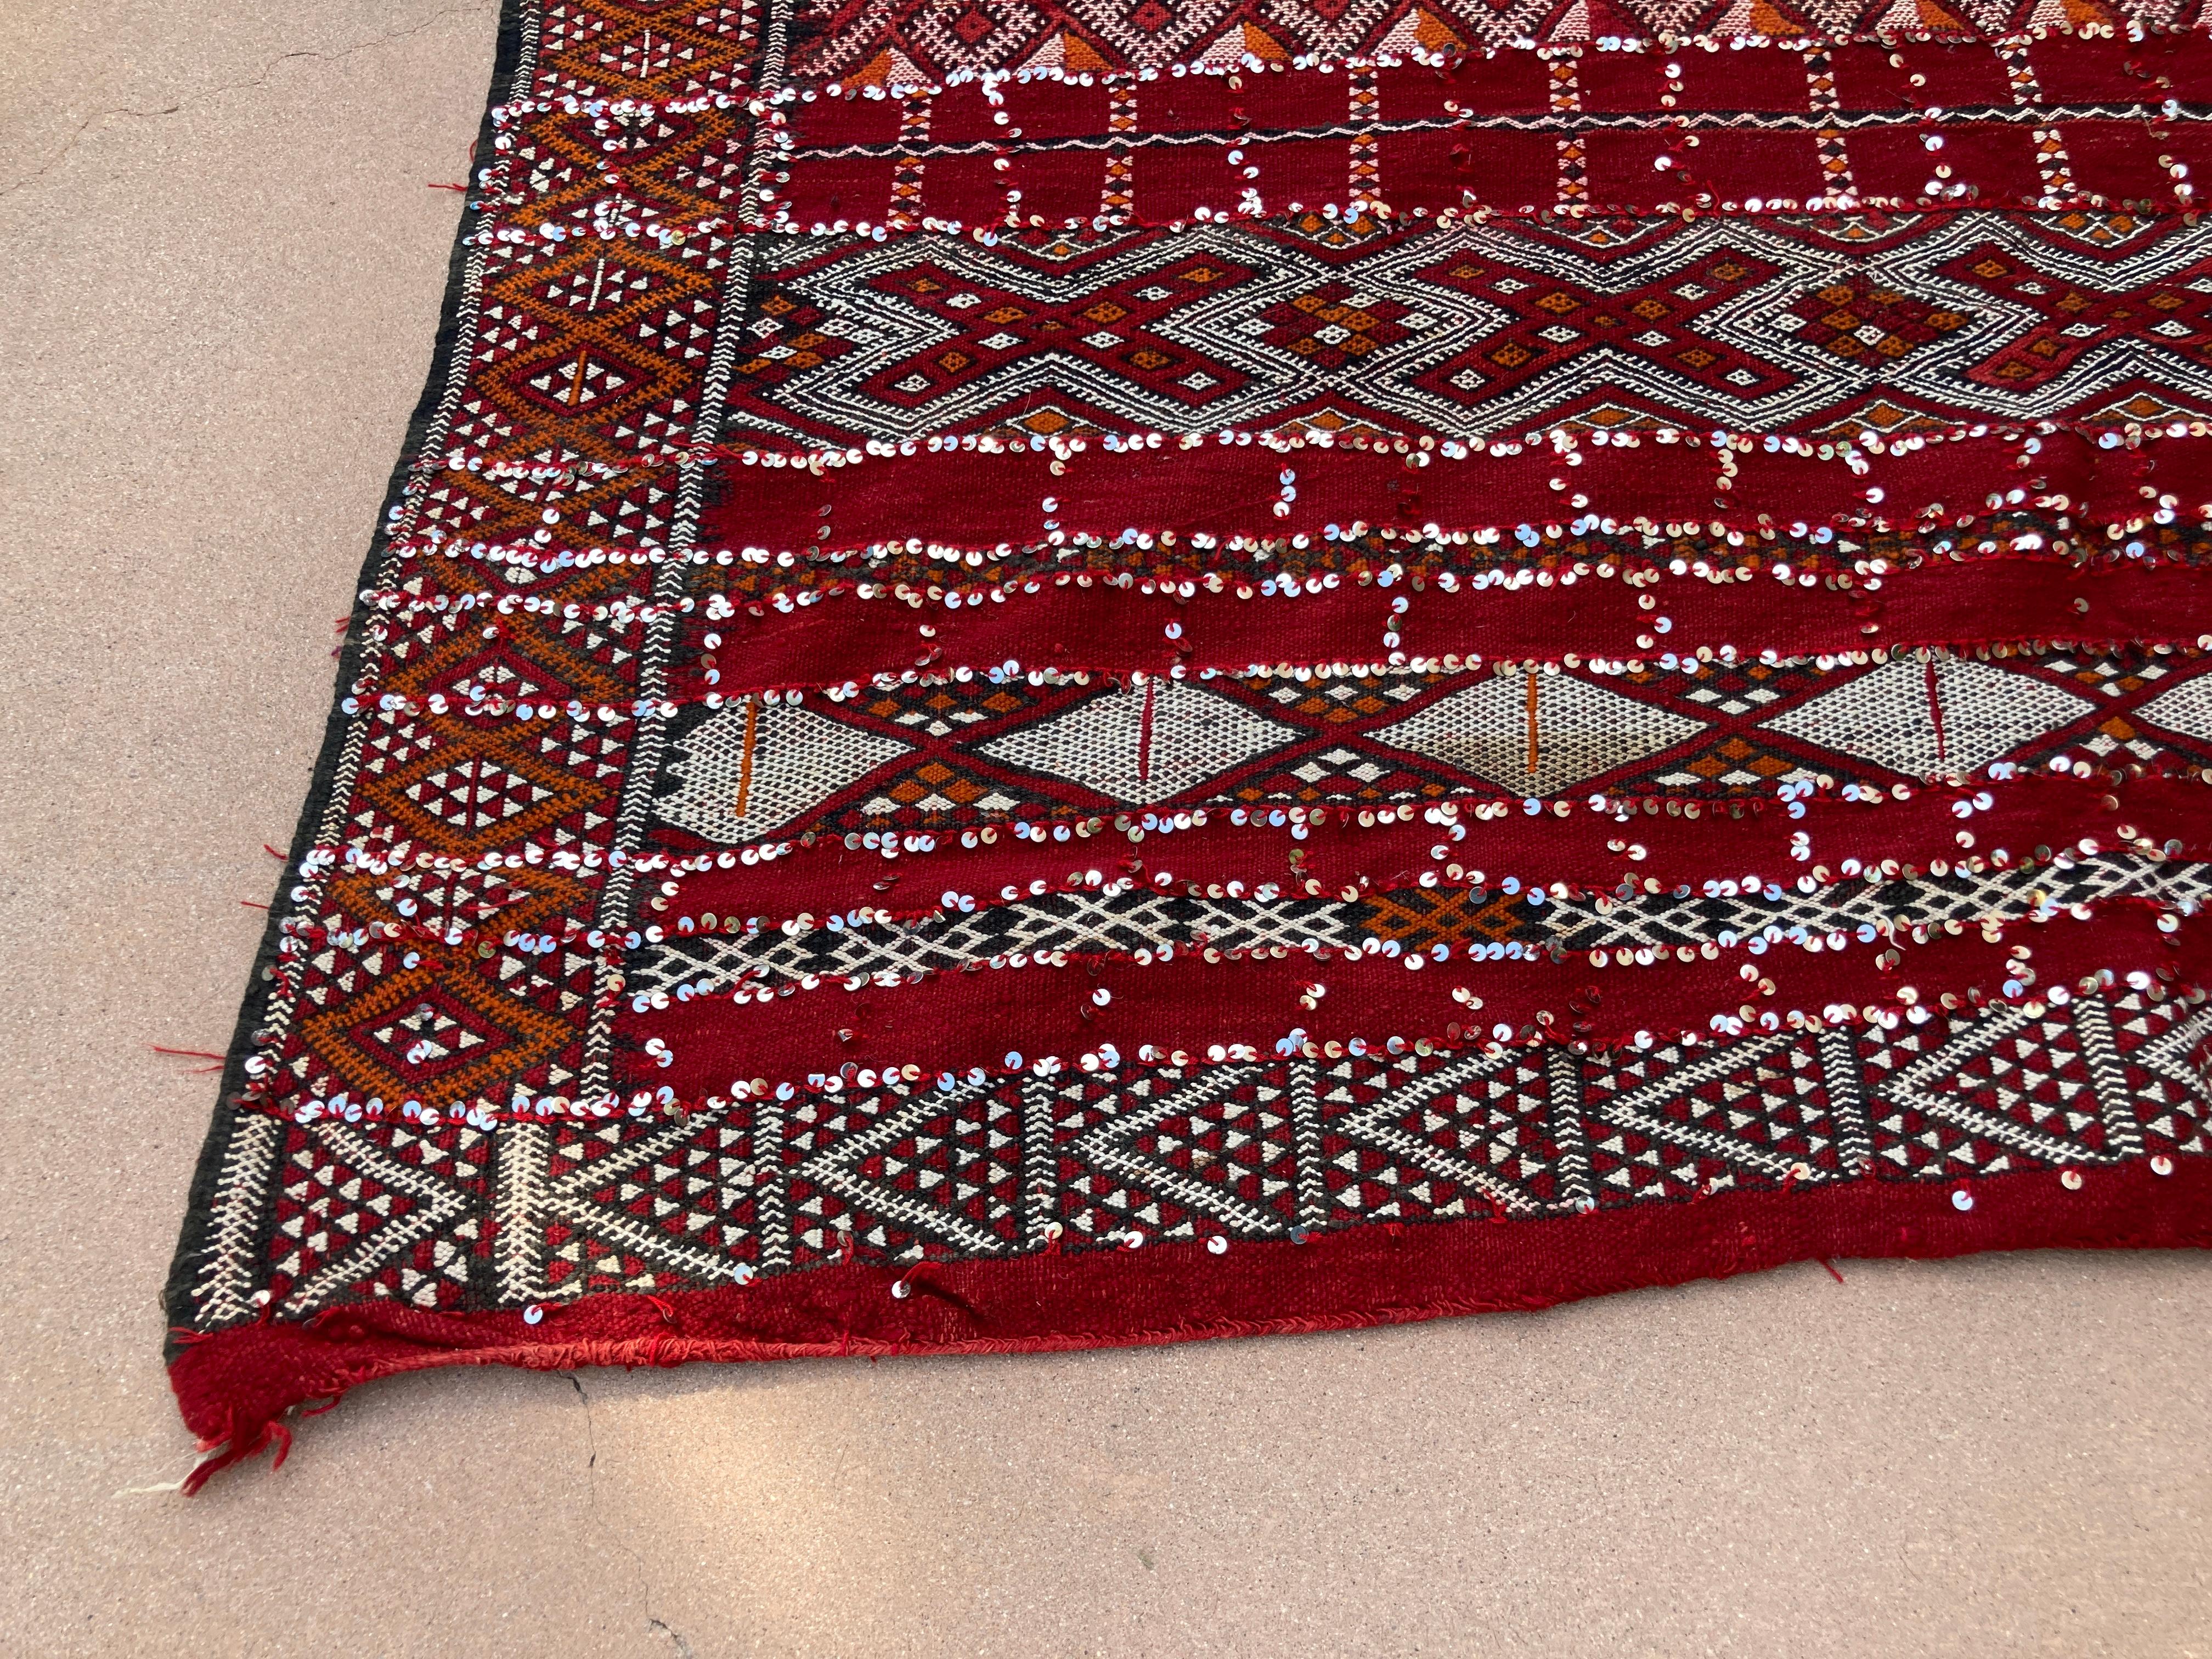 20th Century Moroccan Vintage Ethnic Textile with Sequins North Africa, Handira